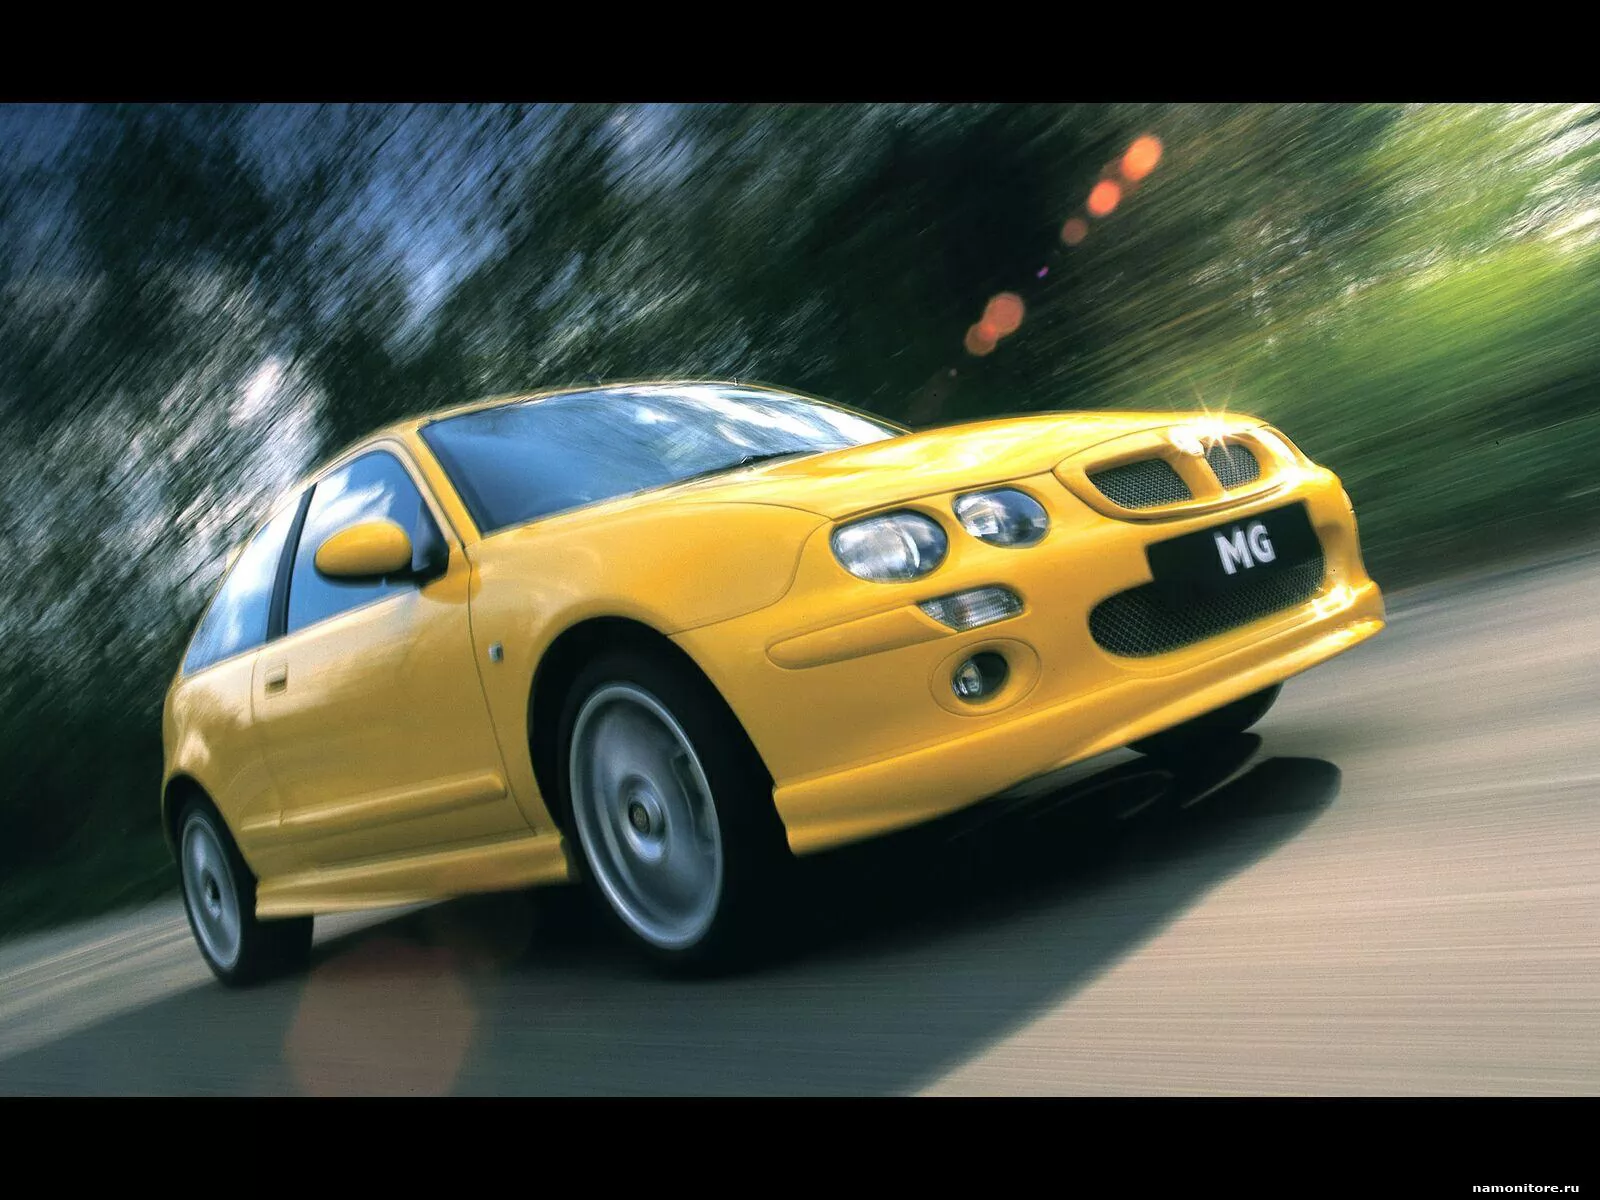 Три желтых машин. Желтая машина леново. Три желтых машины. MG желтый машина. MG ZR.